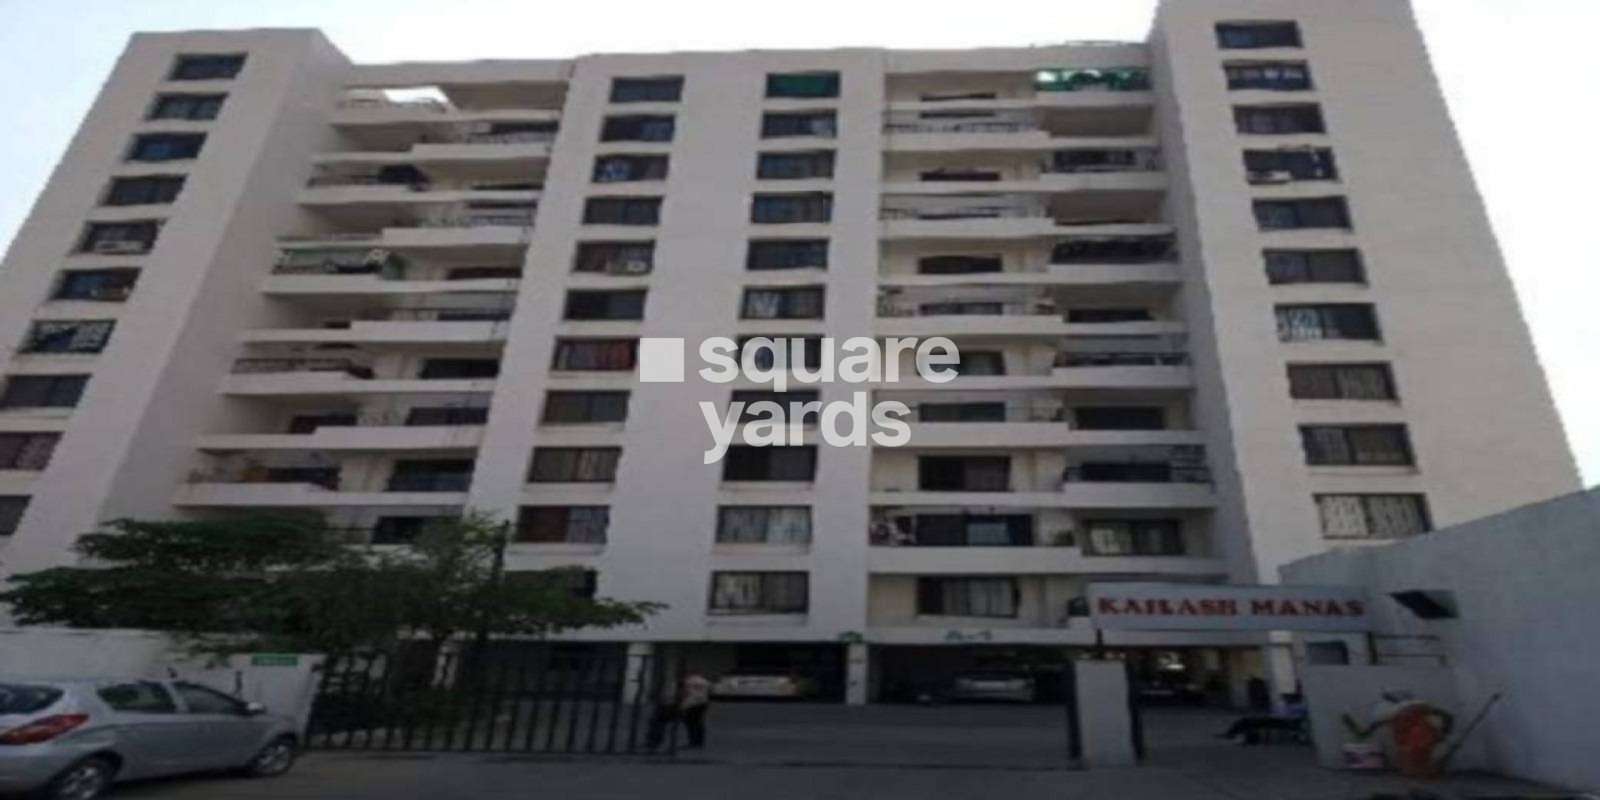 Kailash Manas Apartments Cover Image